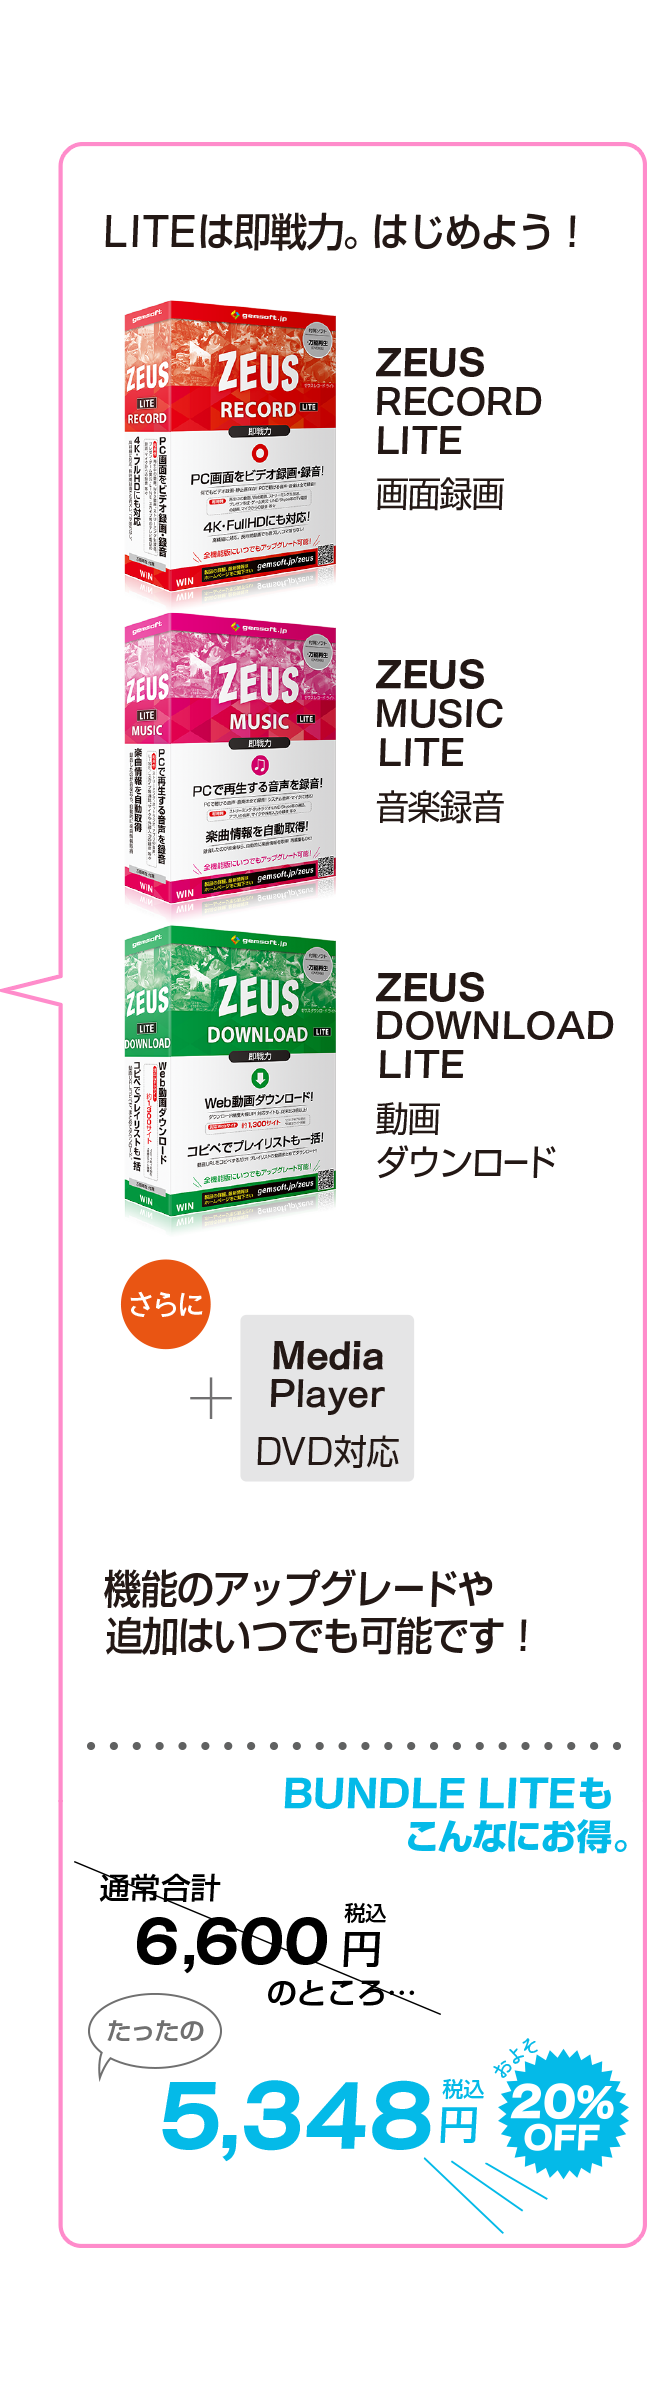 ZEUS Bundle ネット限定版 〜万能バンドル 画面録画録音動画＆音楽ダウンロード カード版 Win対応 通販 